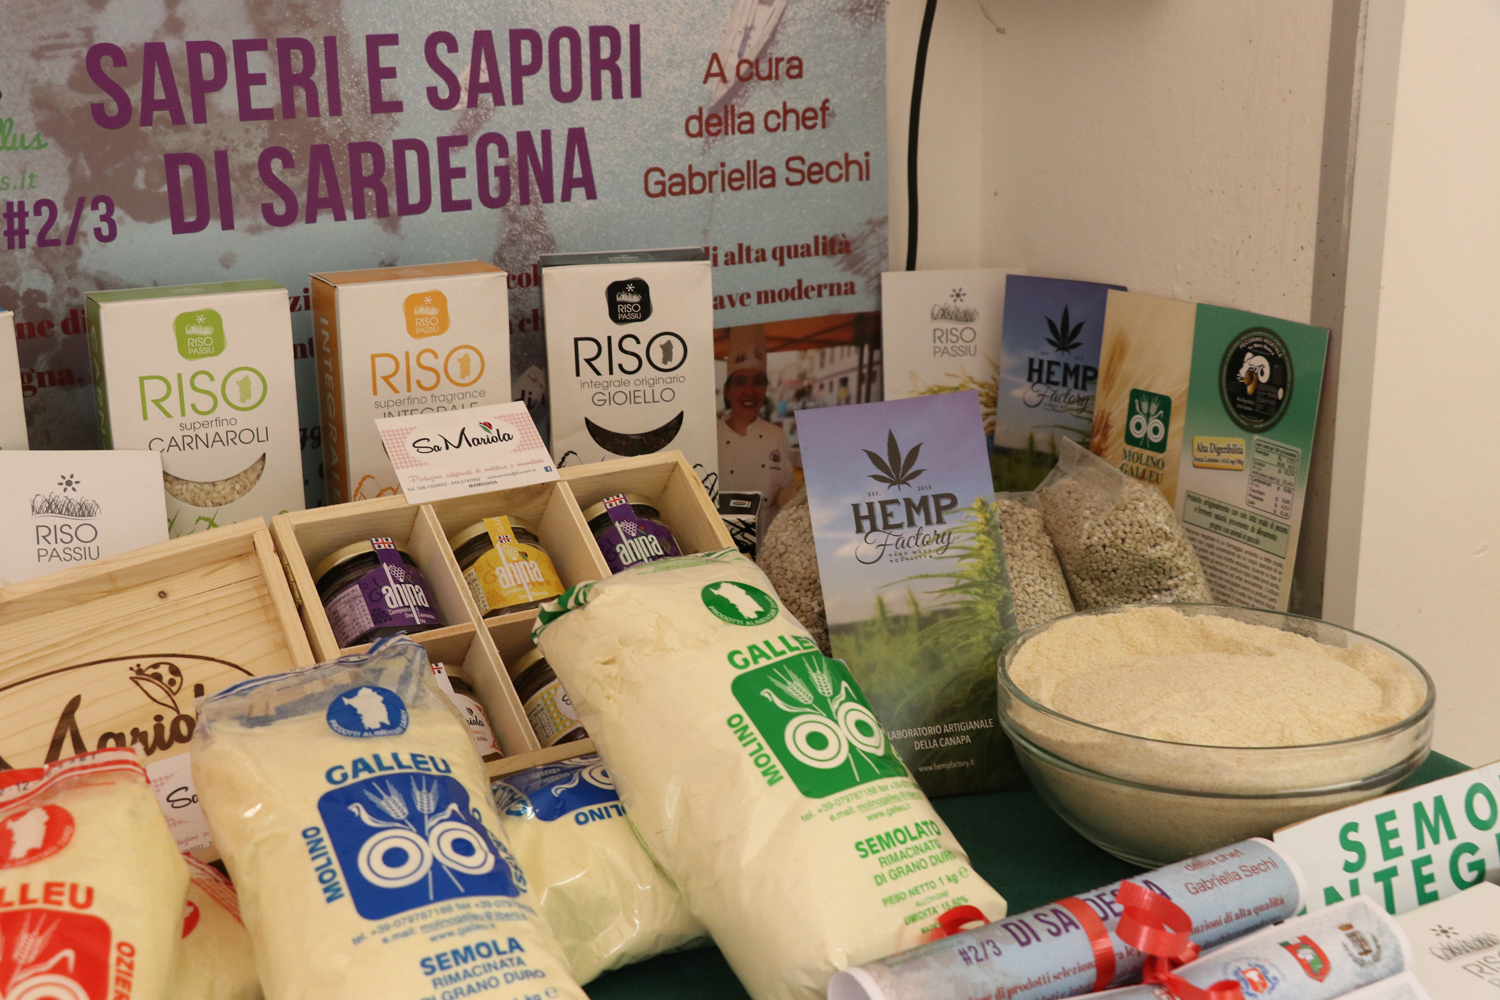 2019-09-21 "Saperi e Sapori di Sardegna" #2/3